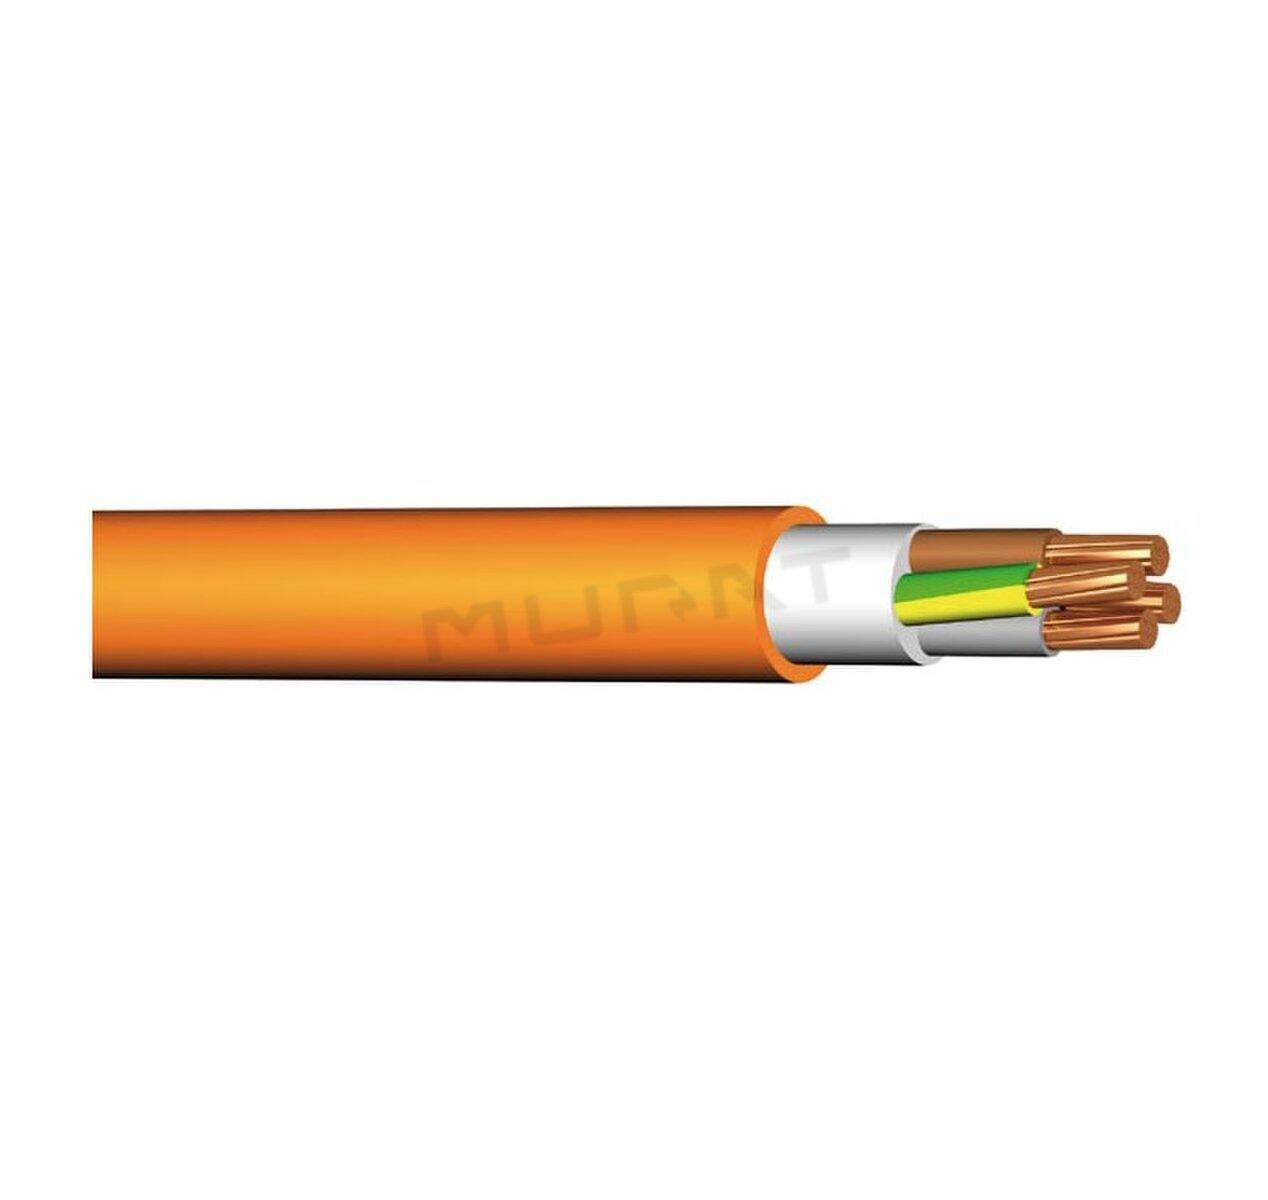 Kábel PRAFlaSafe X-J 4x70 mm2 SM B2ca s1d1a1